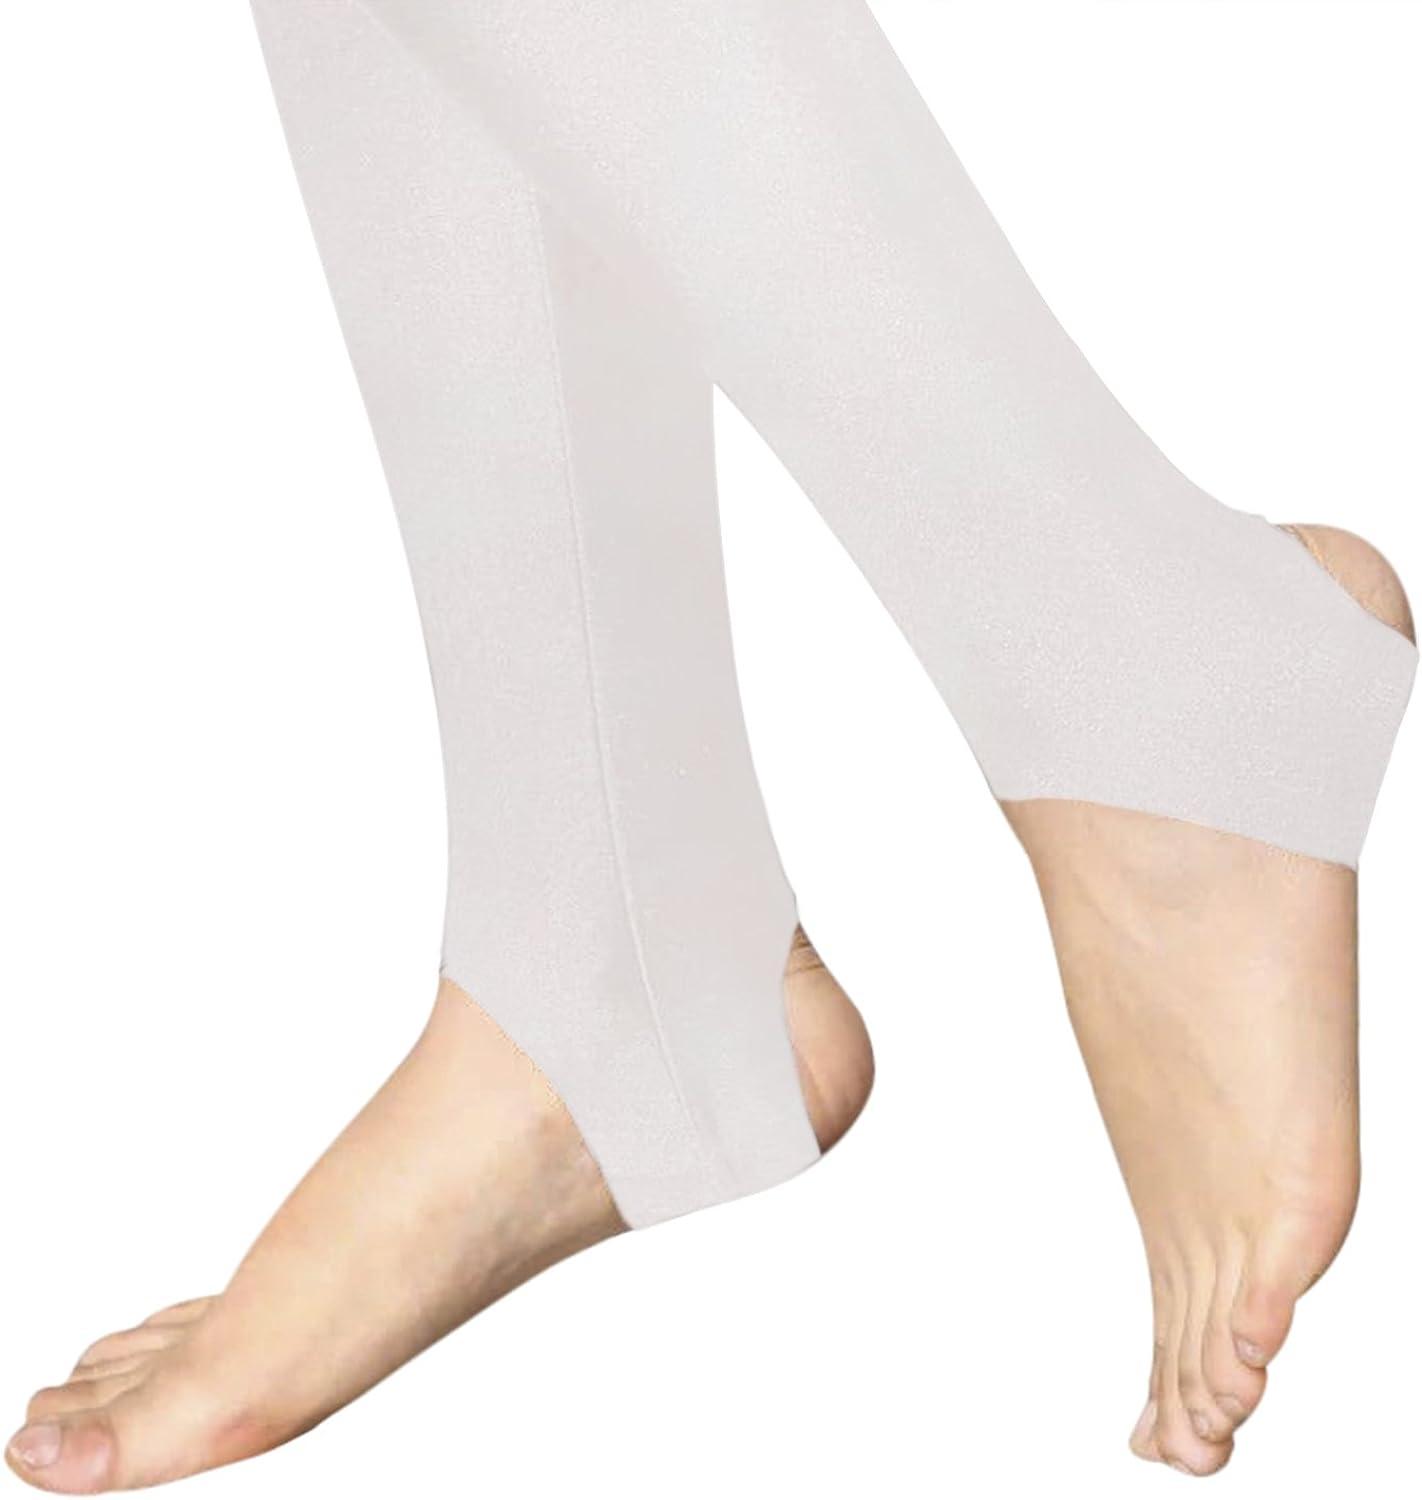 Soft Leggings, Compression Stockings